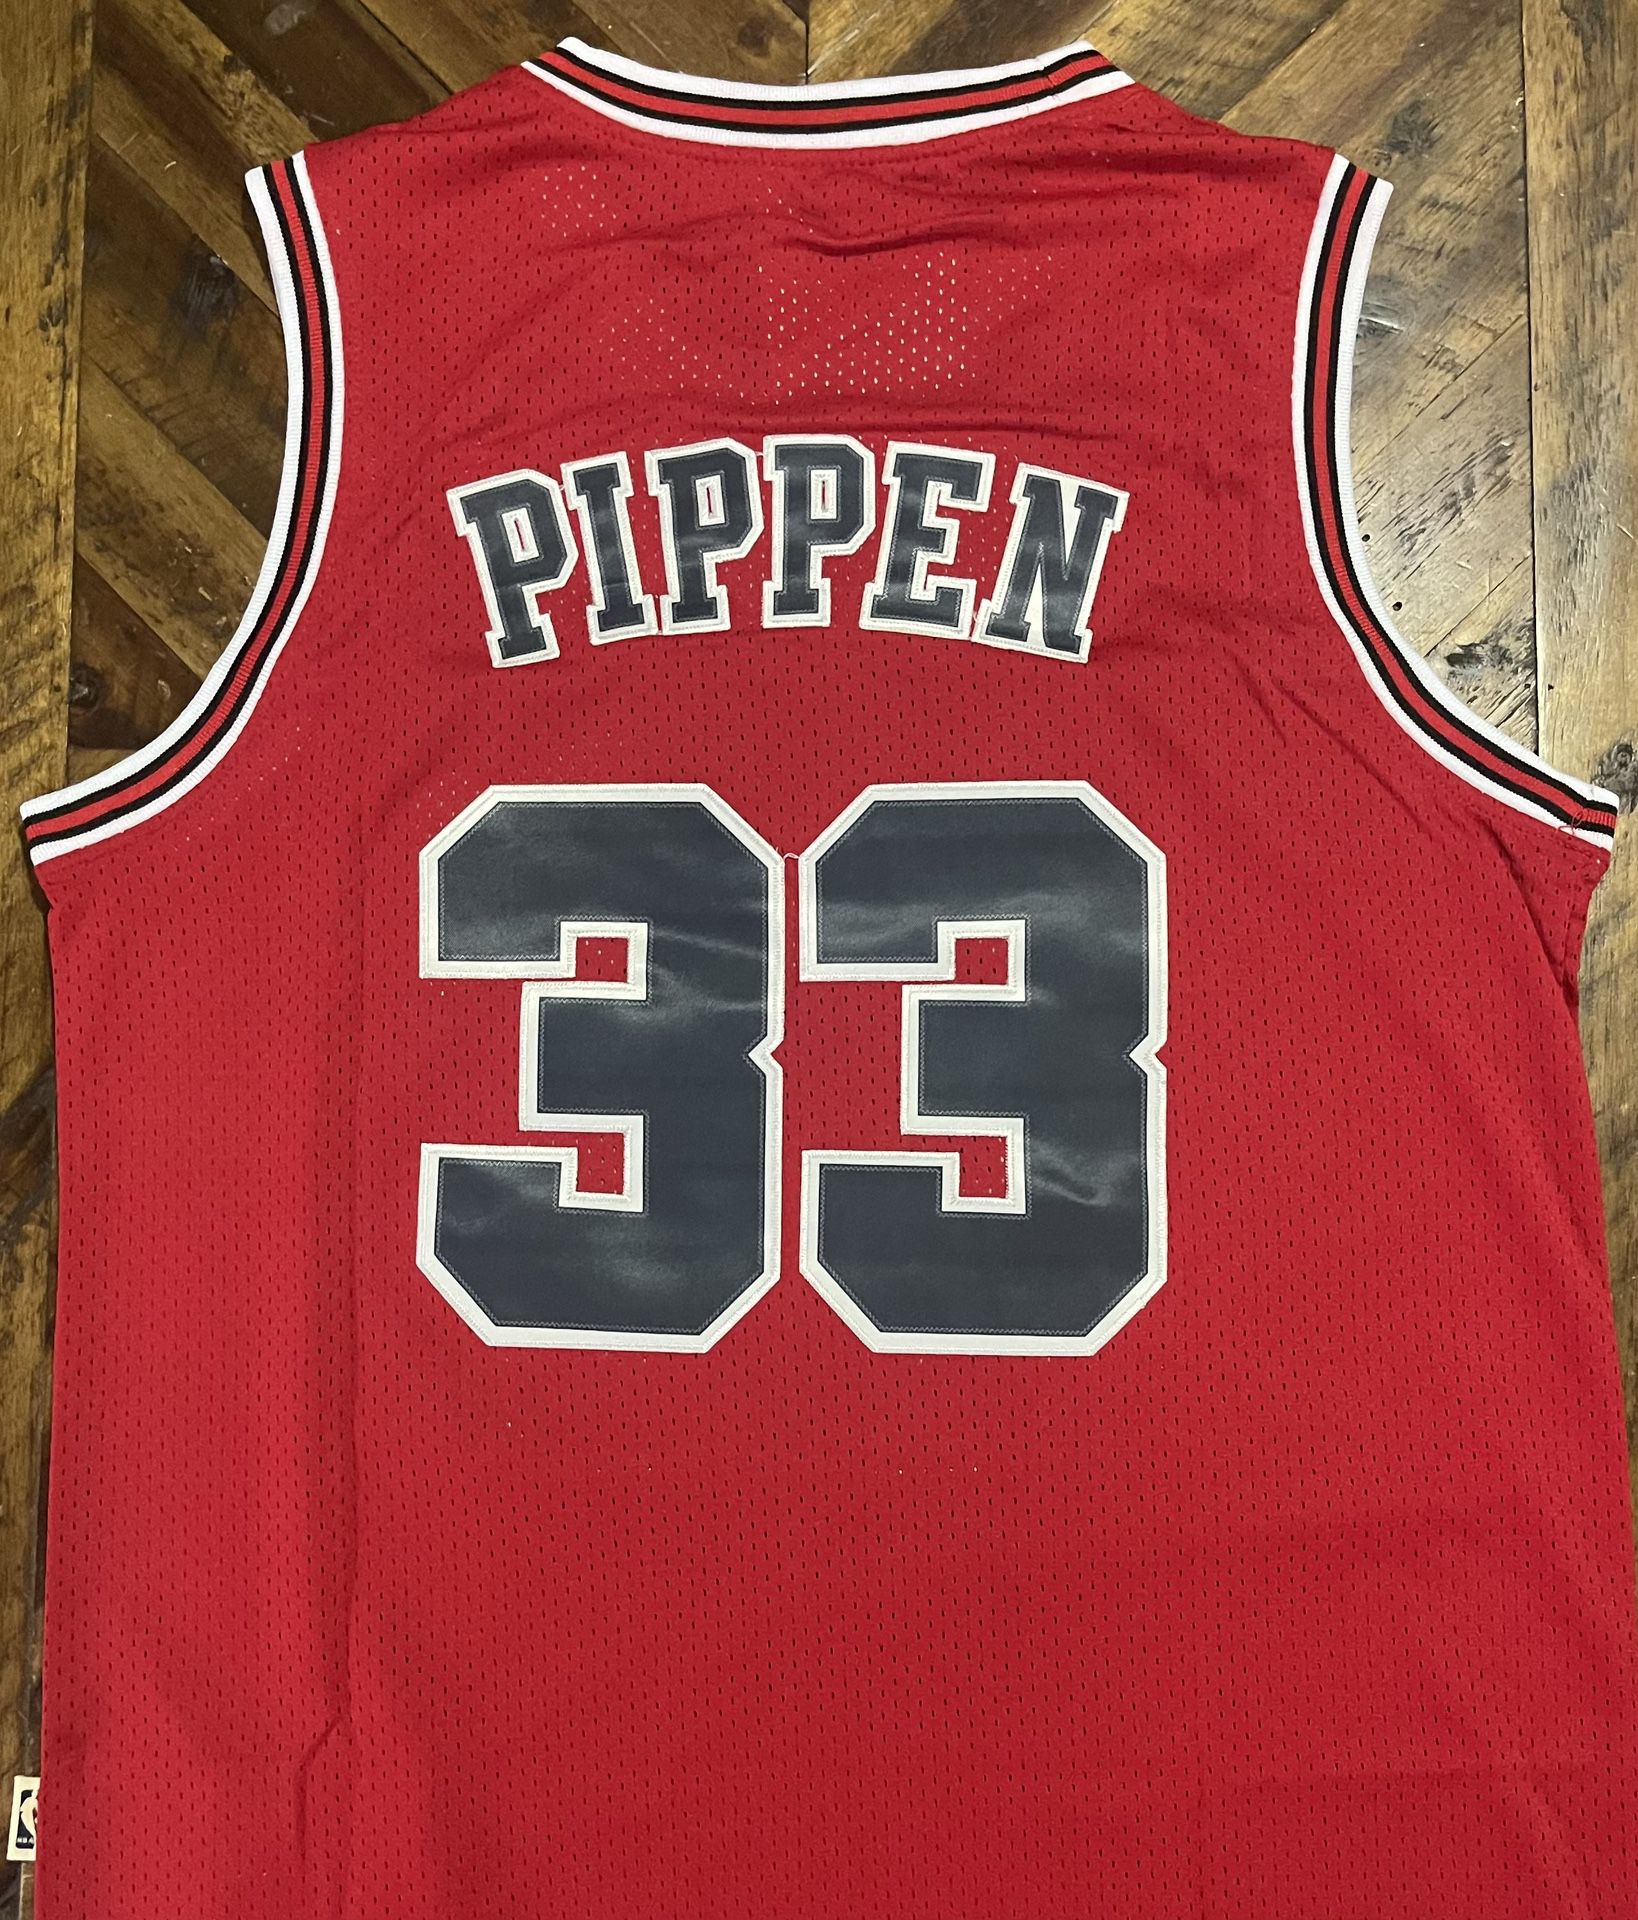 Pippen Men’s Jersey